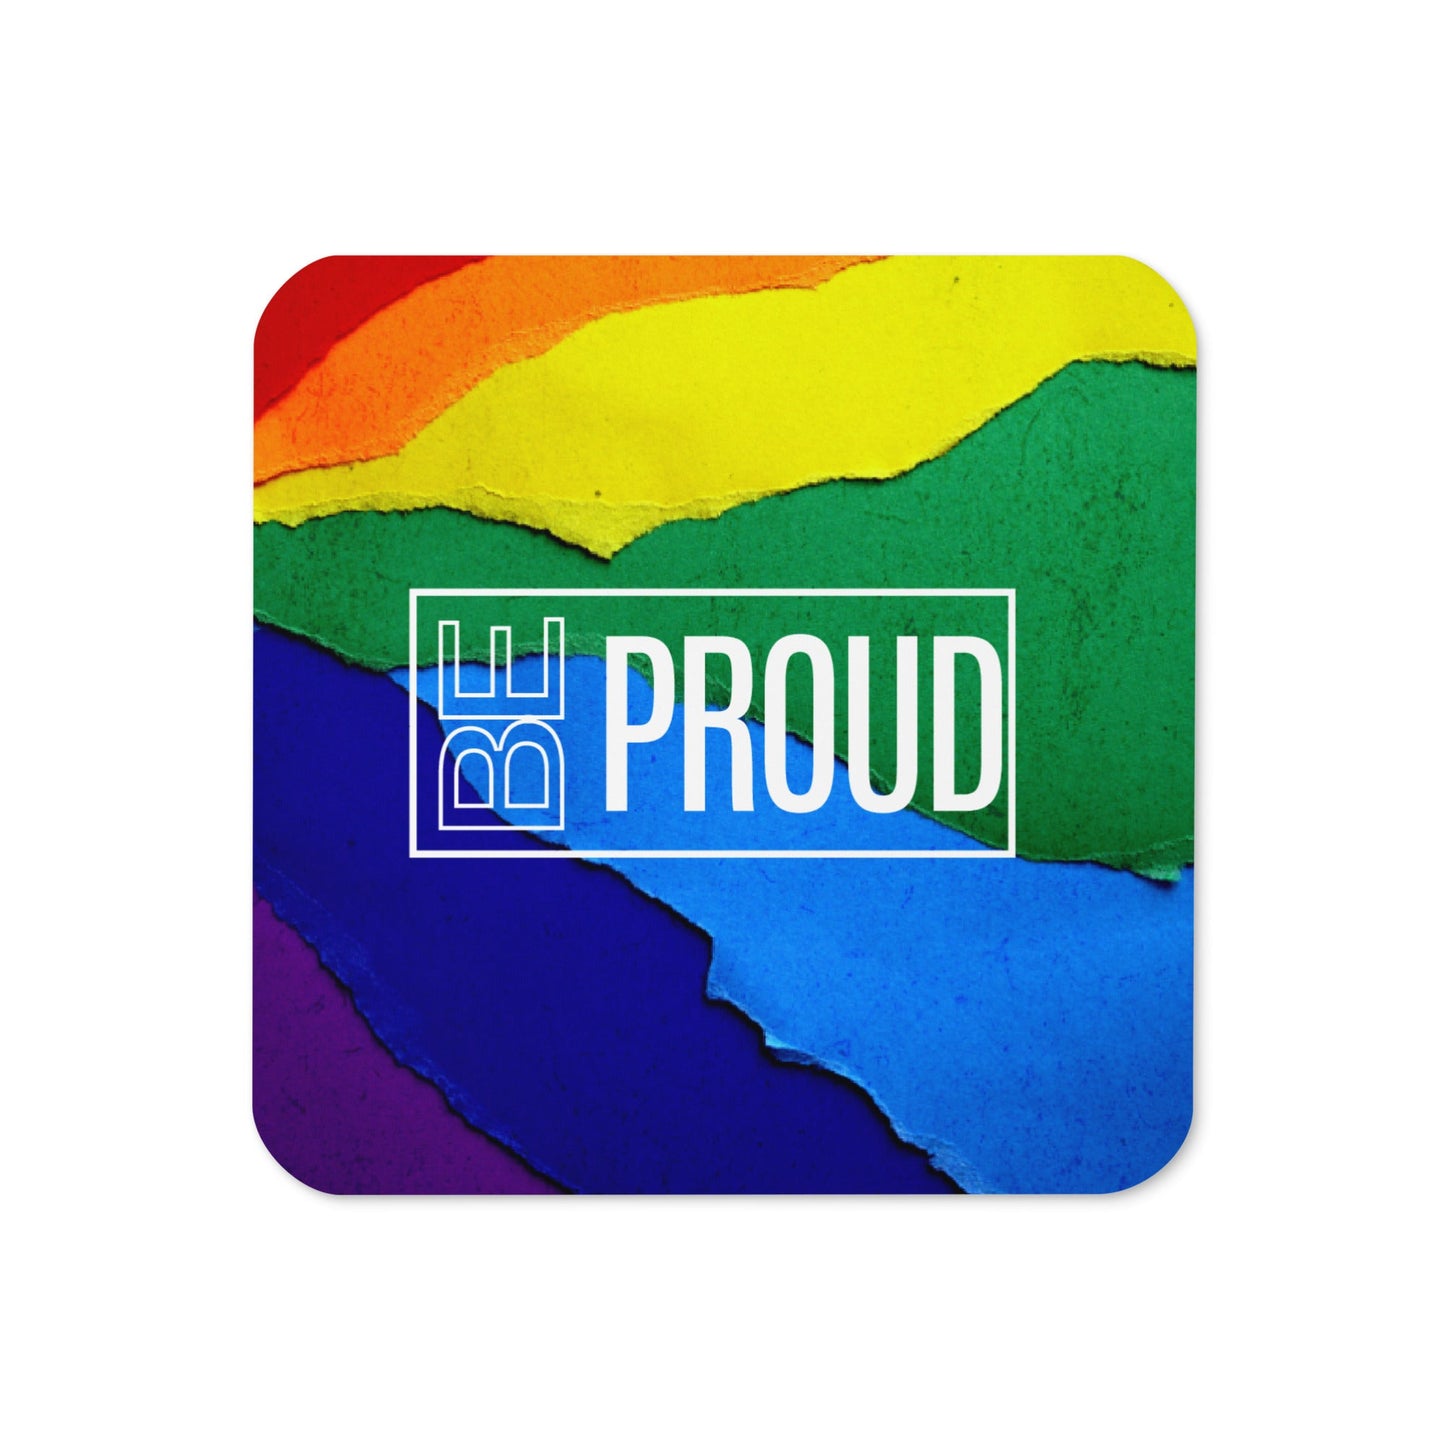 Rainbow - Be Proud - Cork-back coaster - LGBTQ+ - Premium  from T&L Kustoms - Just $5.95! Shop now at T&L Kustoms